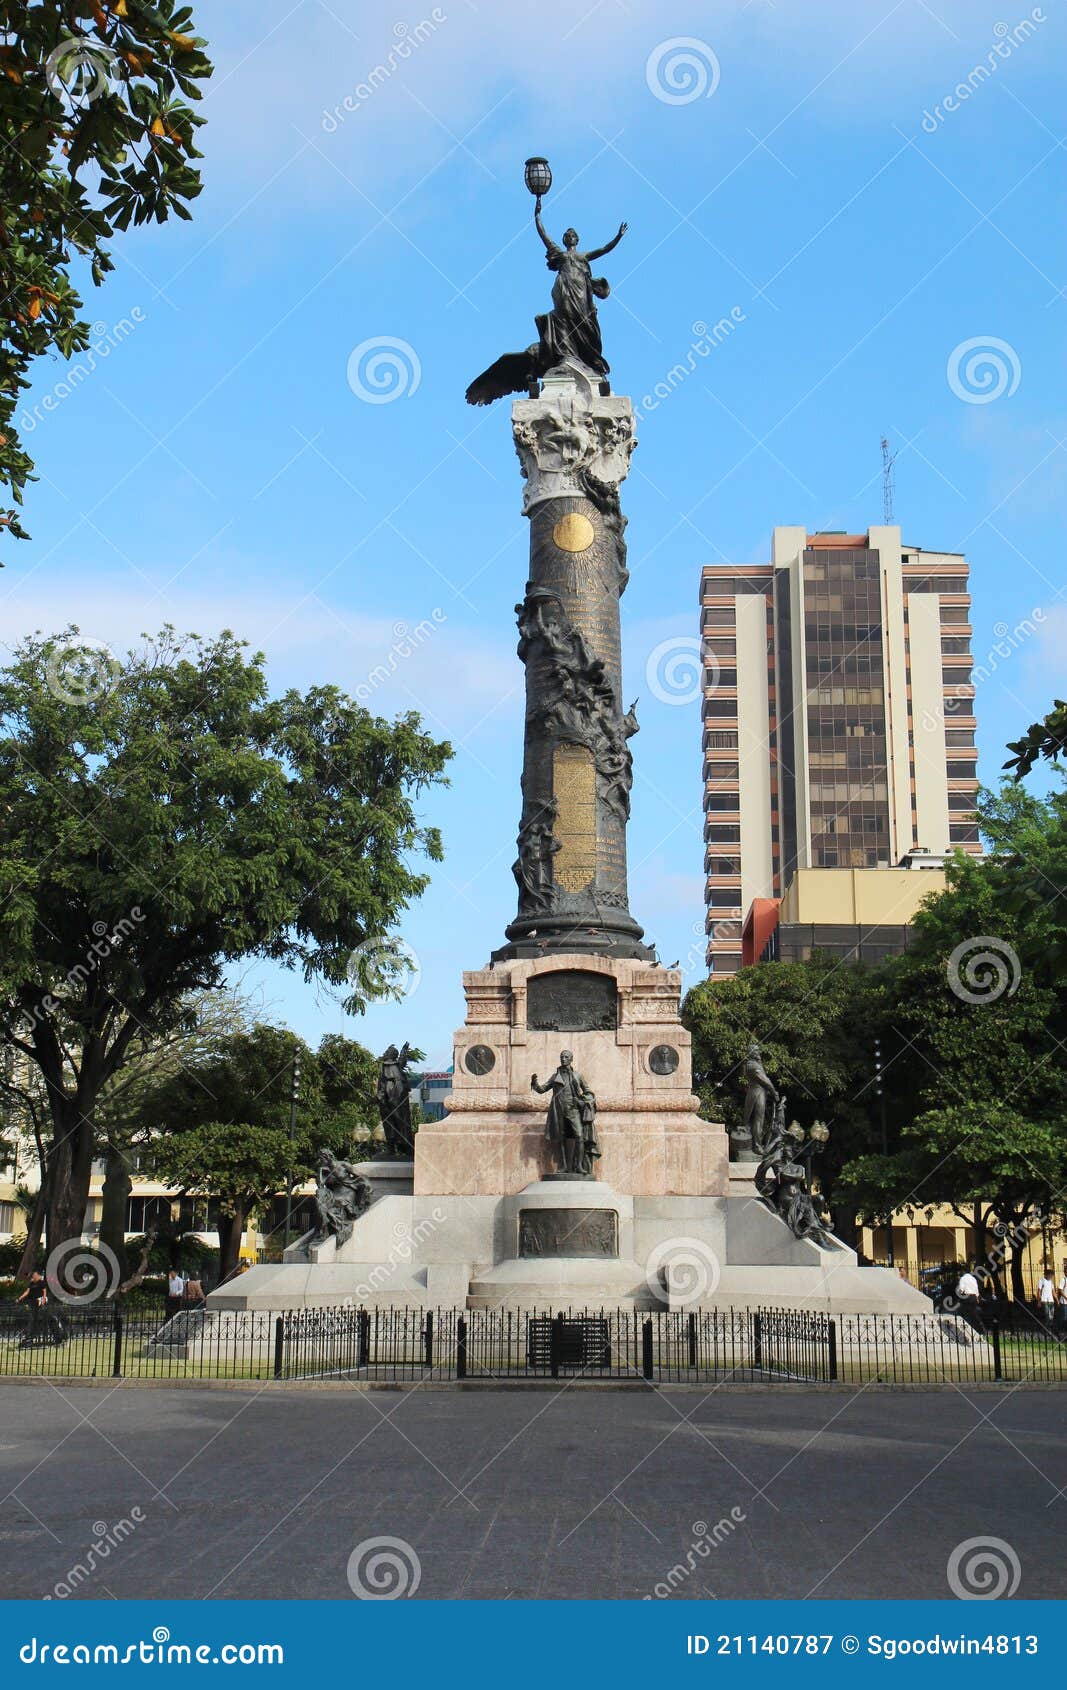 statue of liberty in guayaquil, ecuador